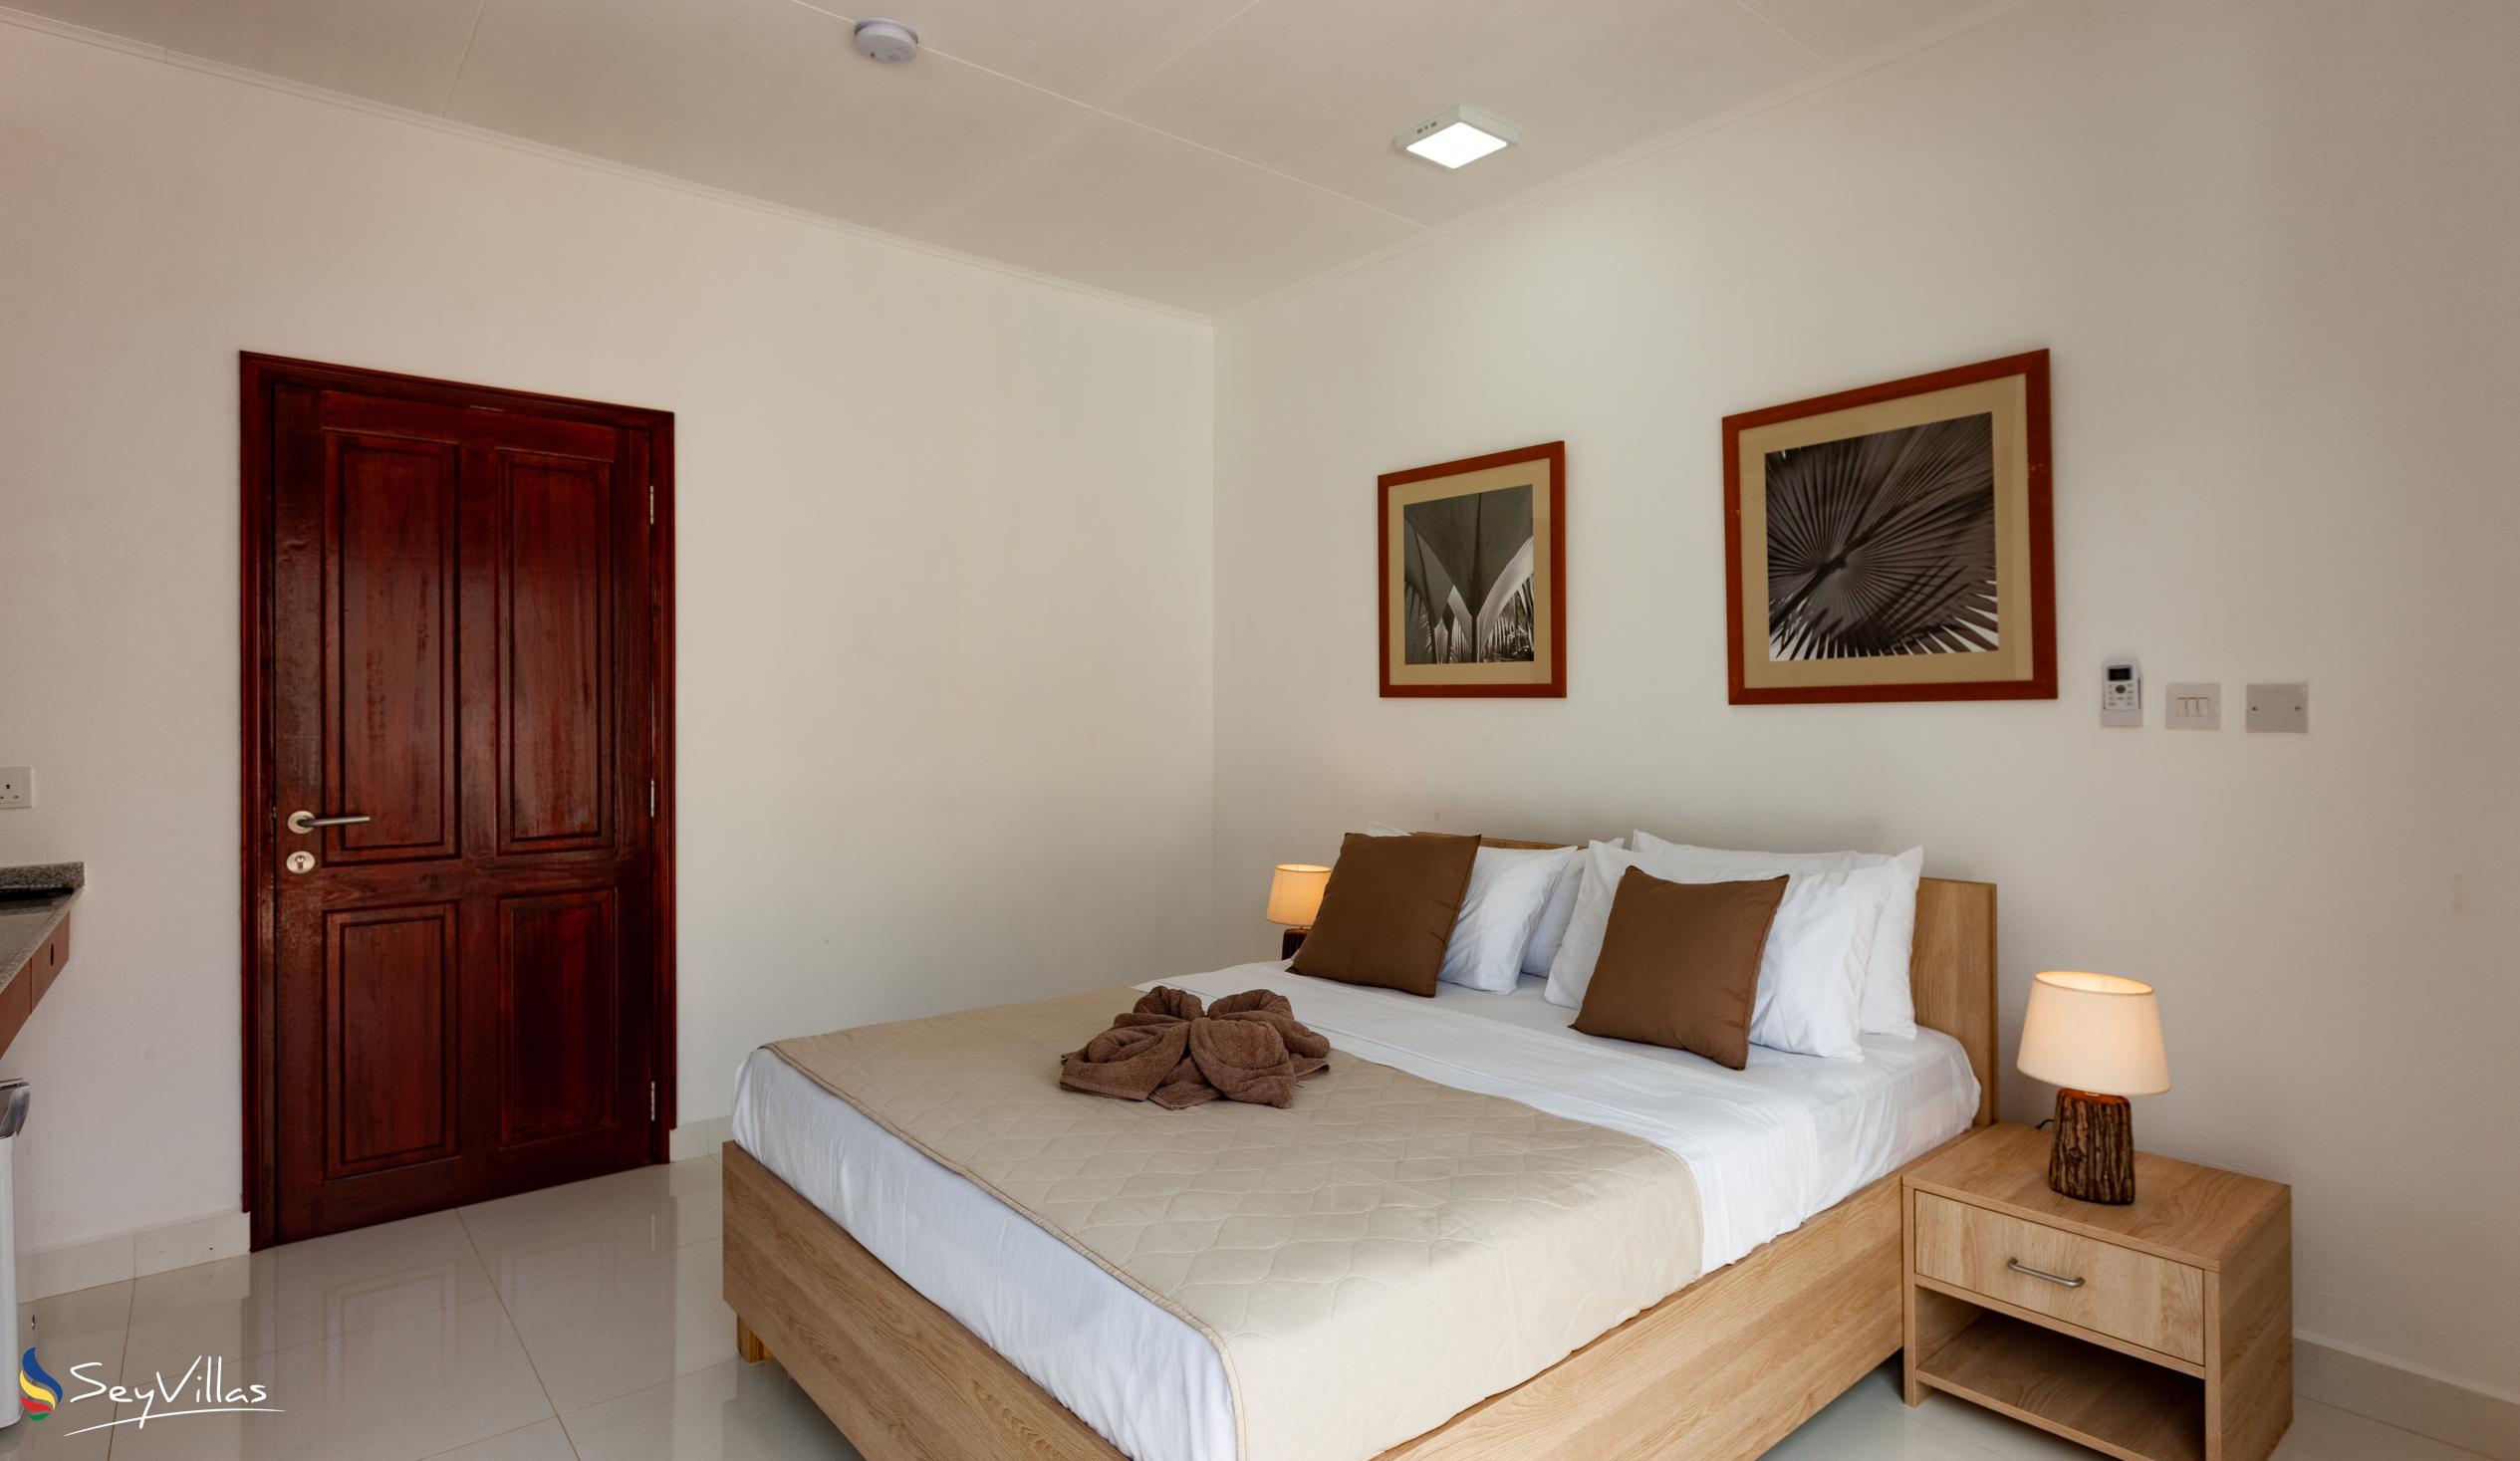 Foto 28: Hotel Plein Soleil - Camera Deluxe con letto queensize - Praslin (Seychelles)